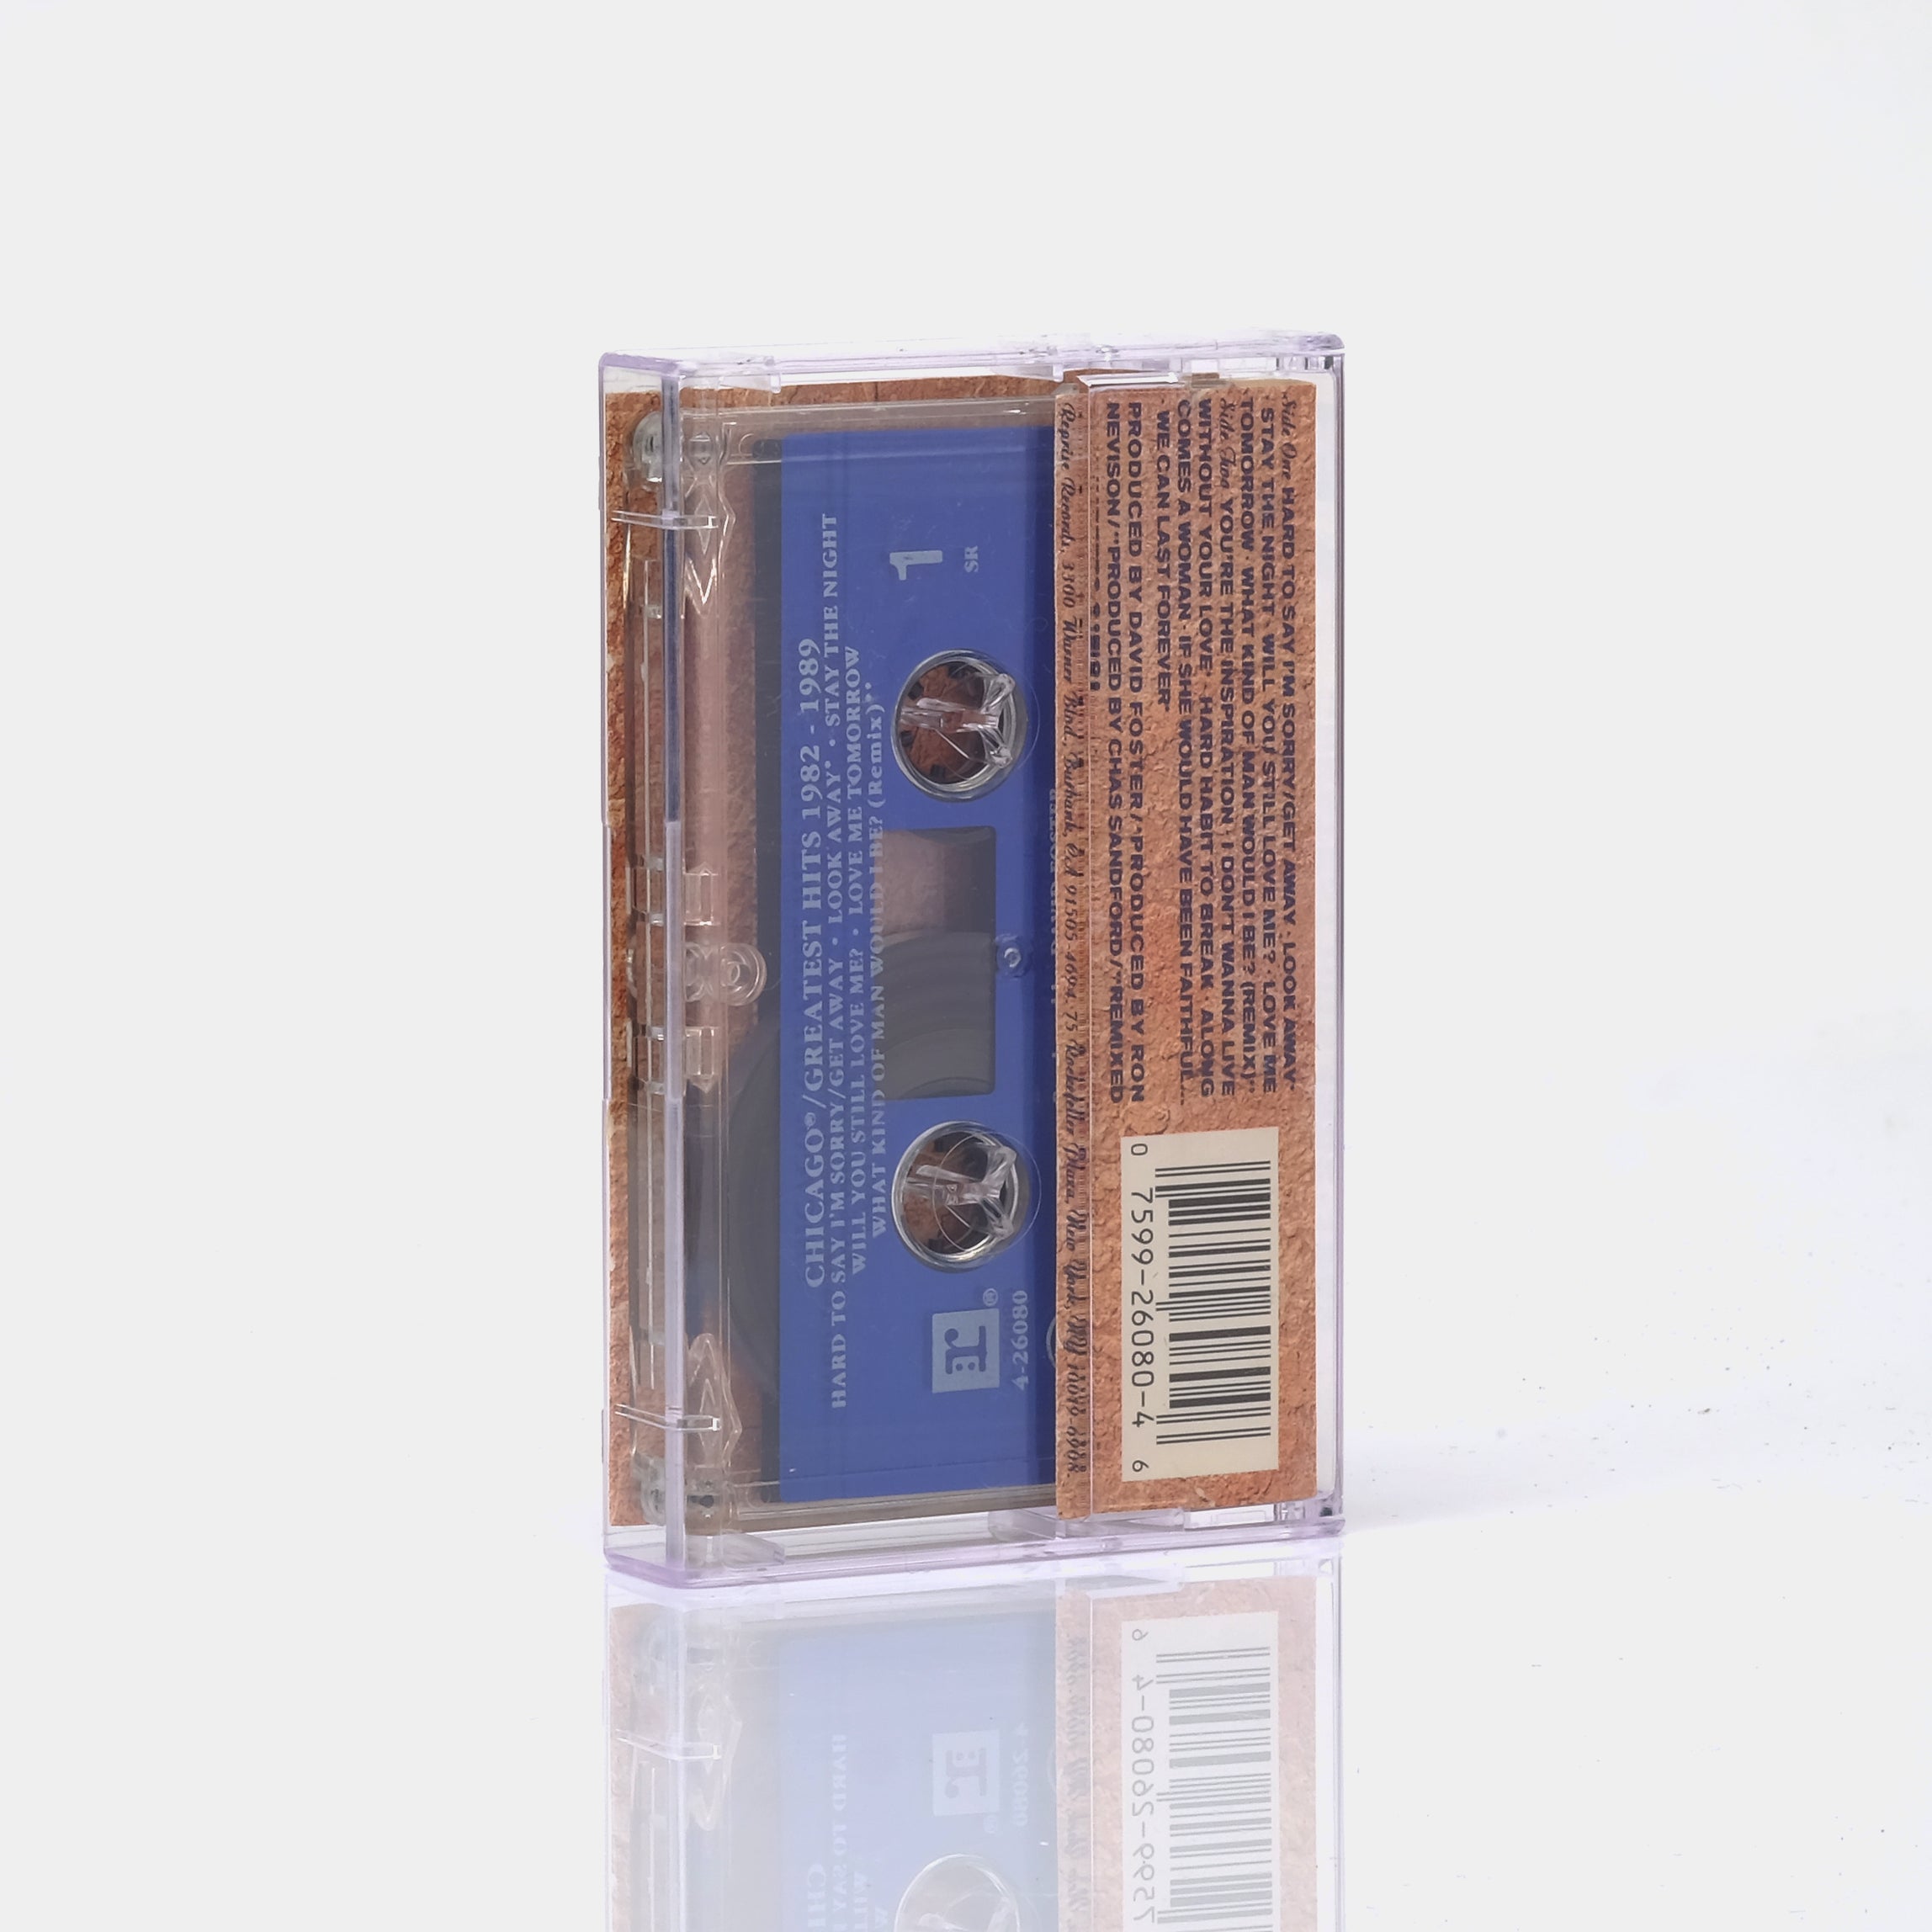 Chicago - Greatest Hits 1982-1989 Cassette Tape